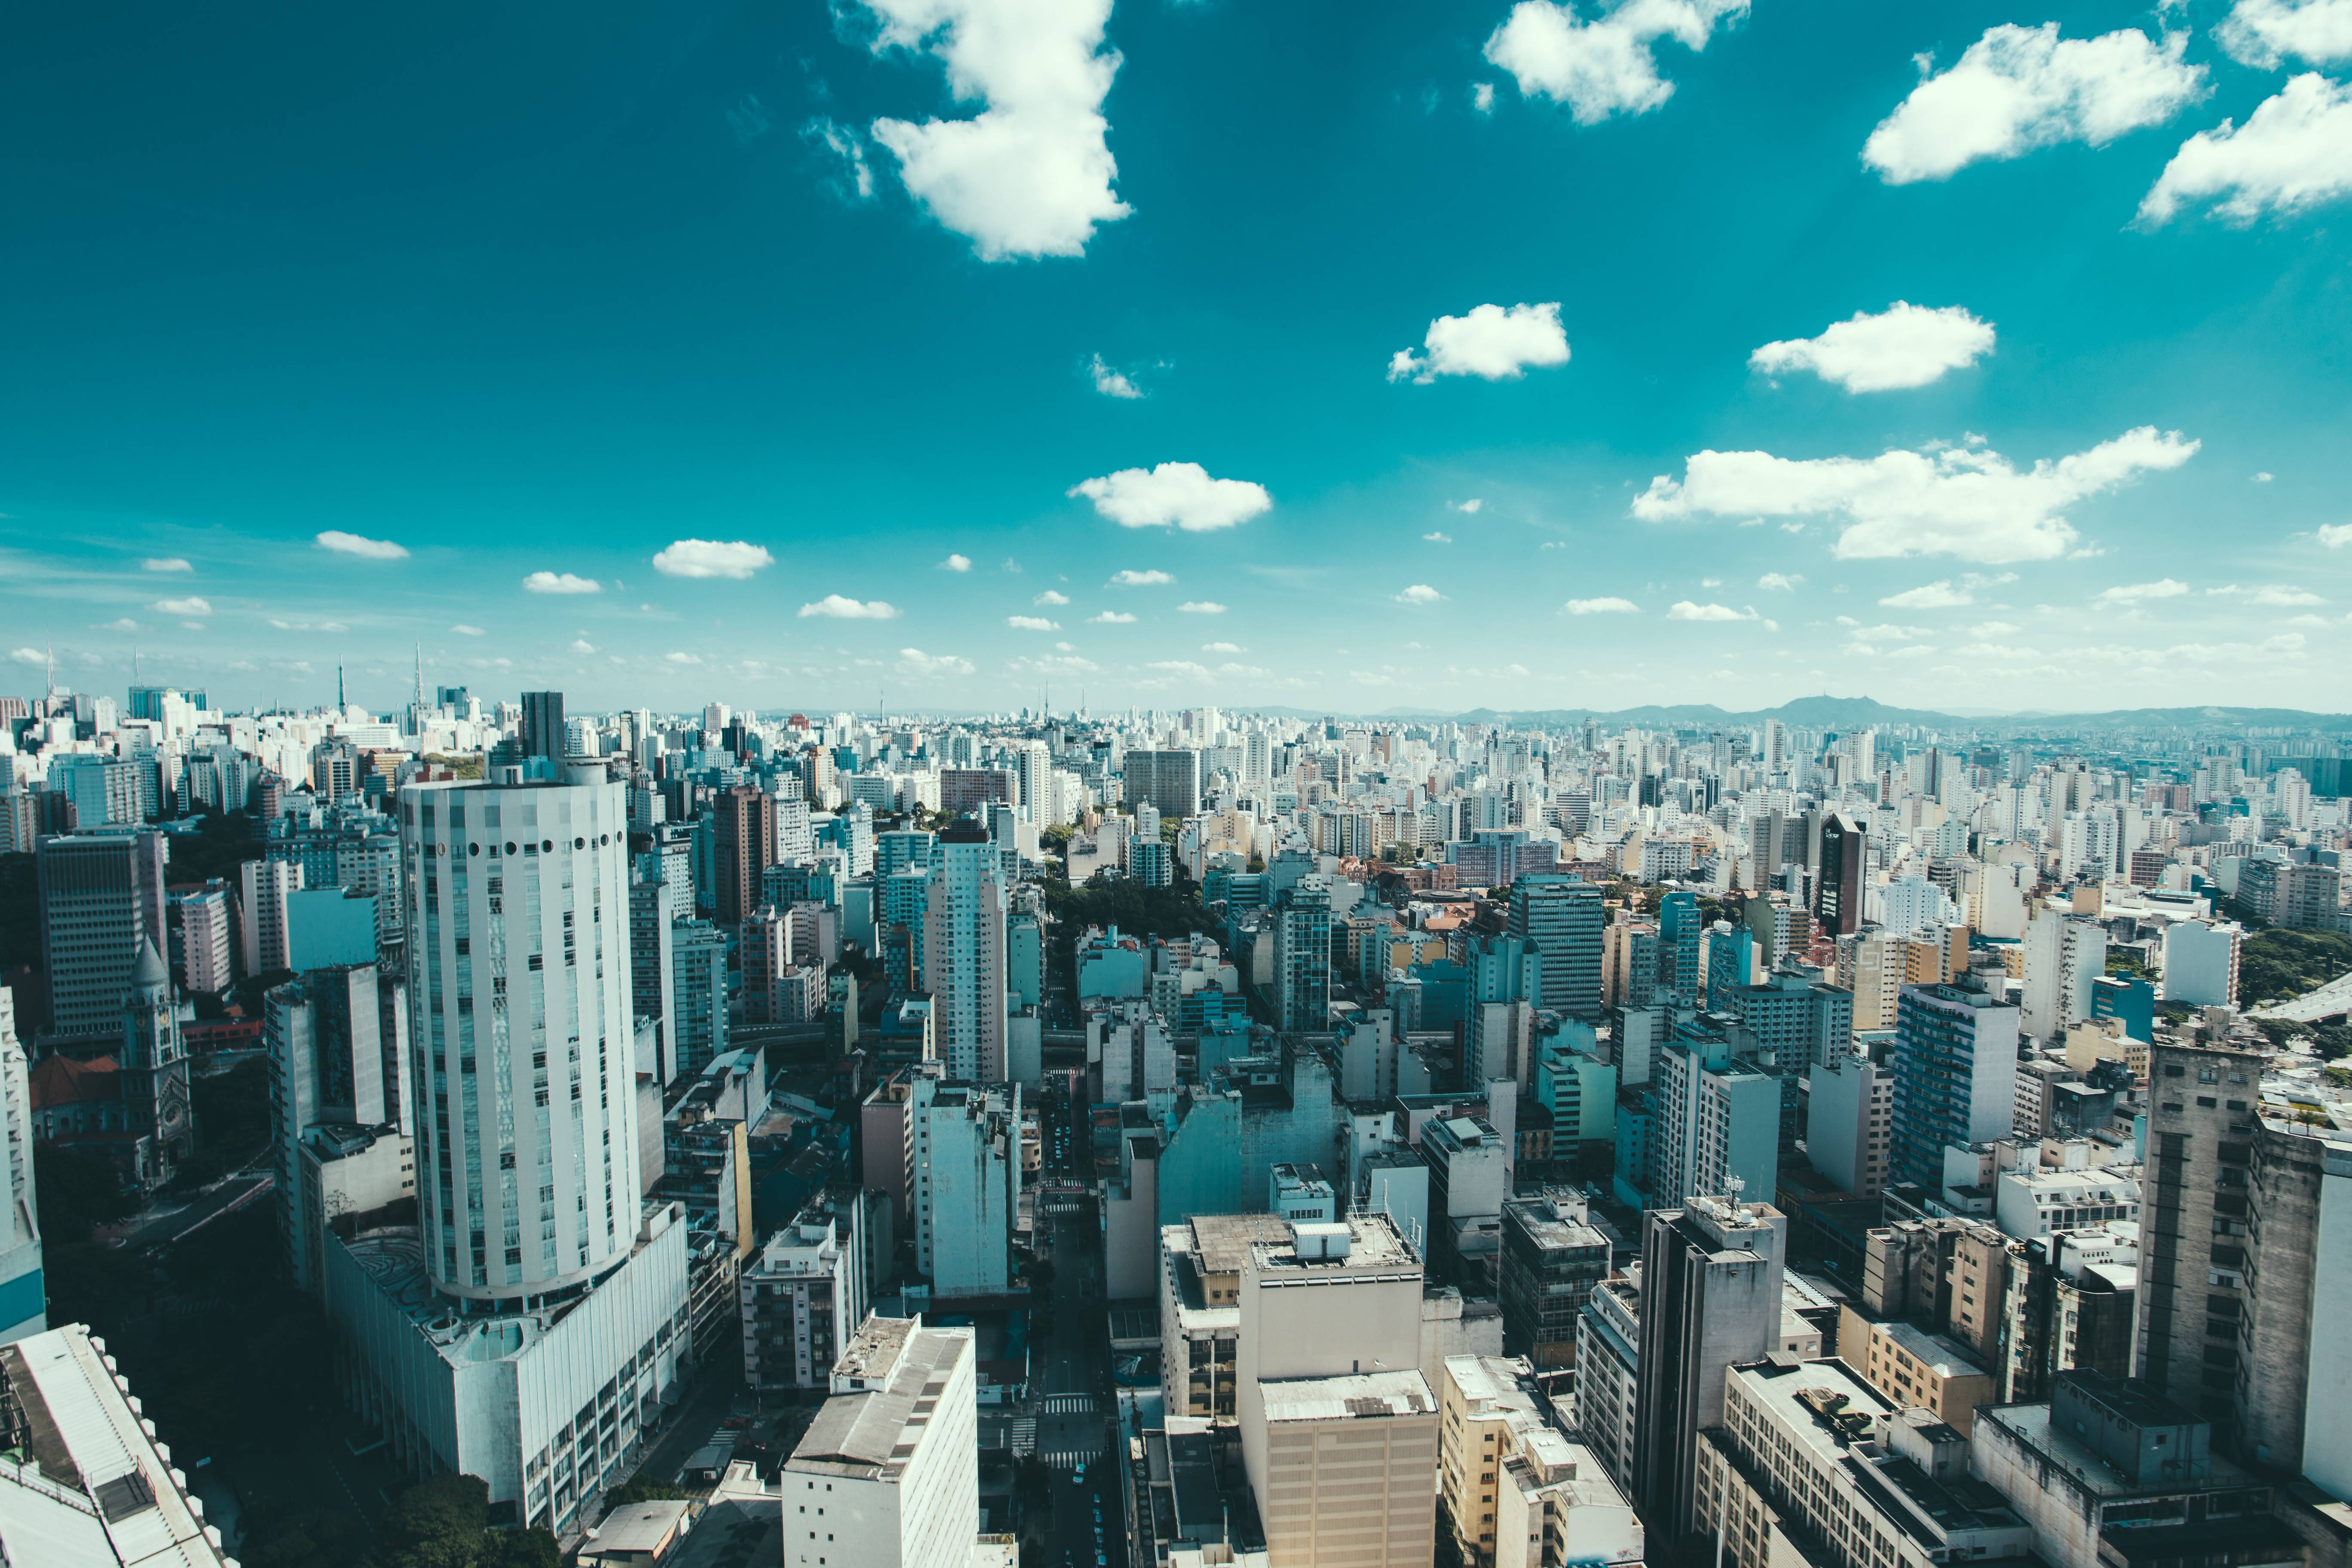 #sao, #buildings, #clouds, #city, #brazil, #cityscape, #paulo HD Wallpaper